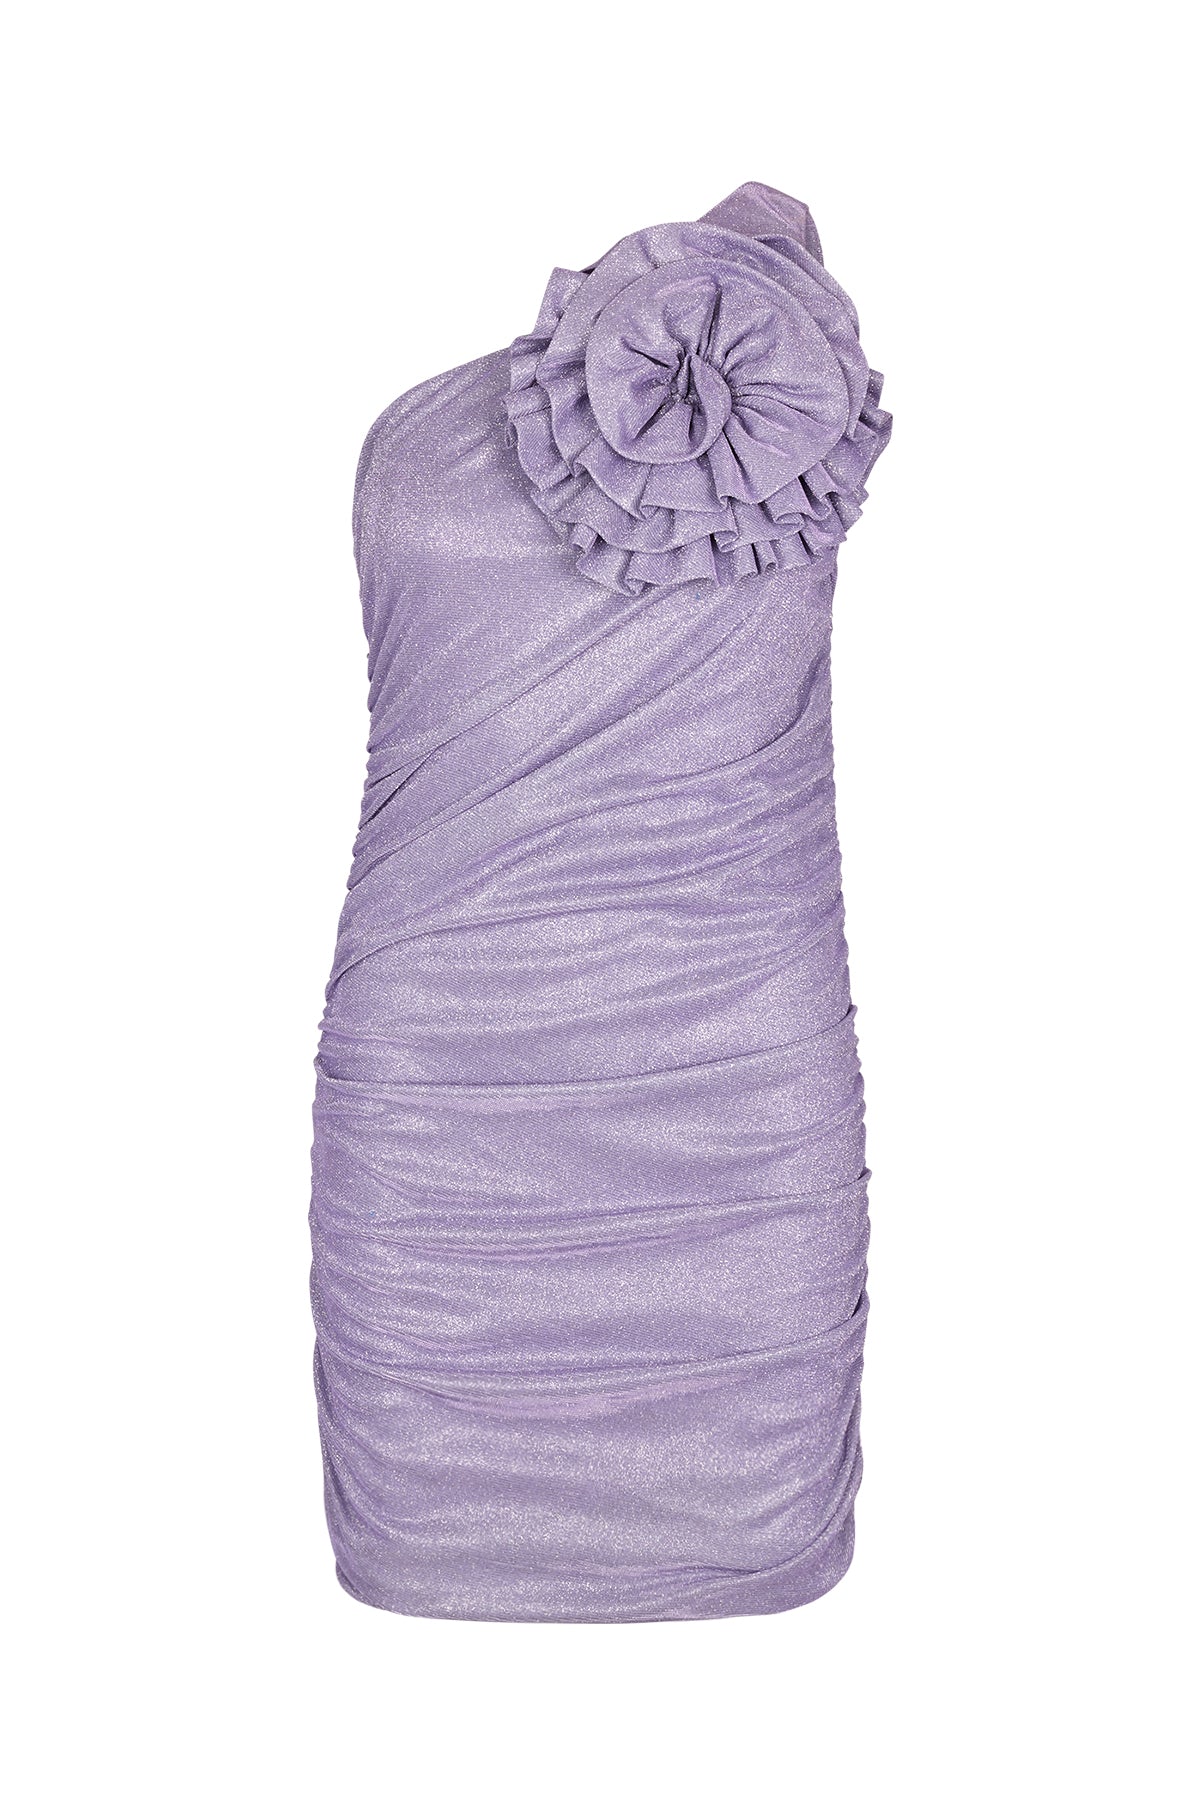 CRAS SATC Dress Dress 6000 Lavender